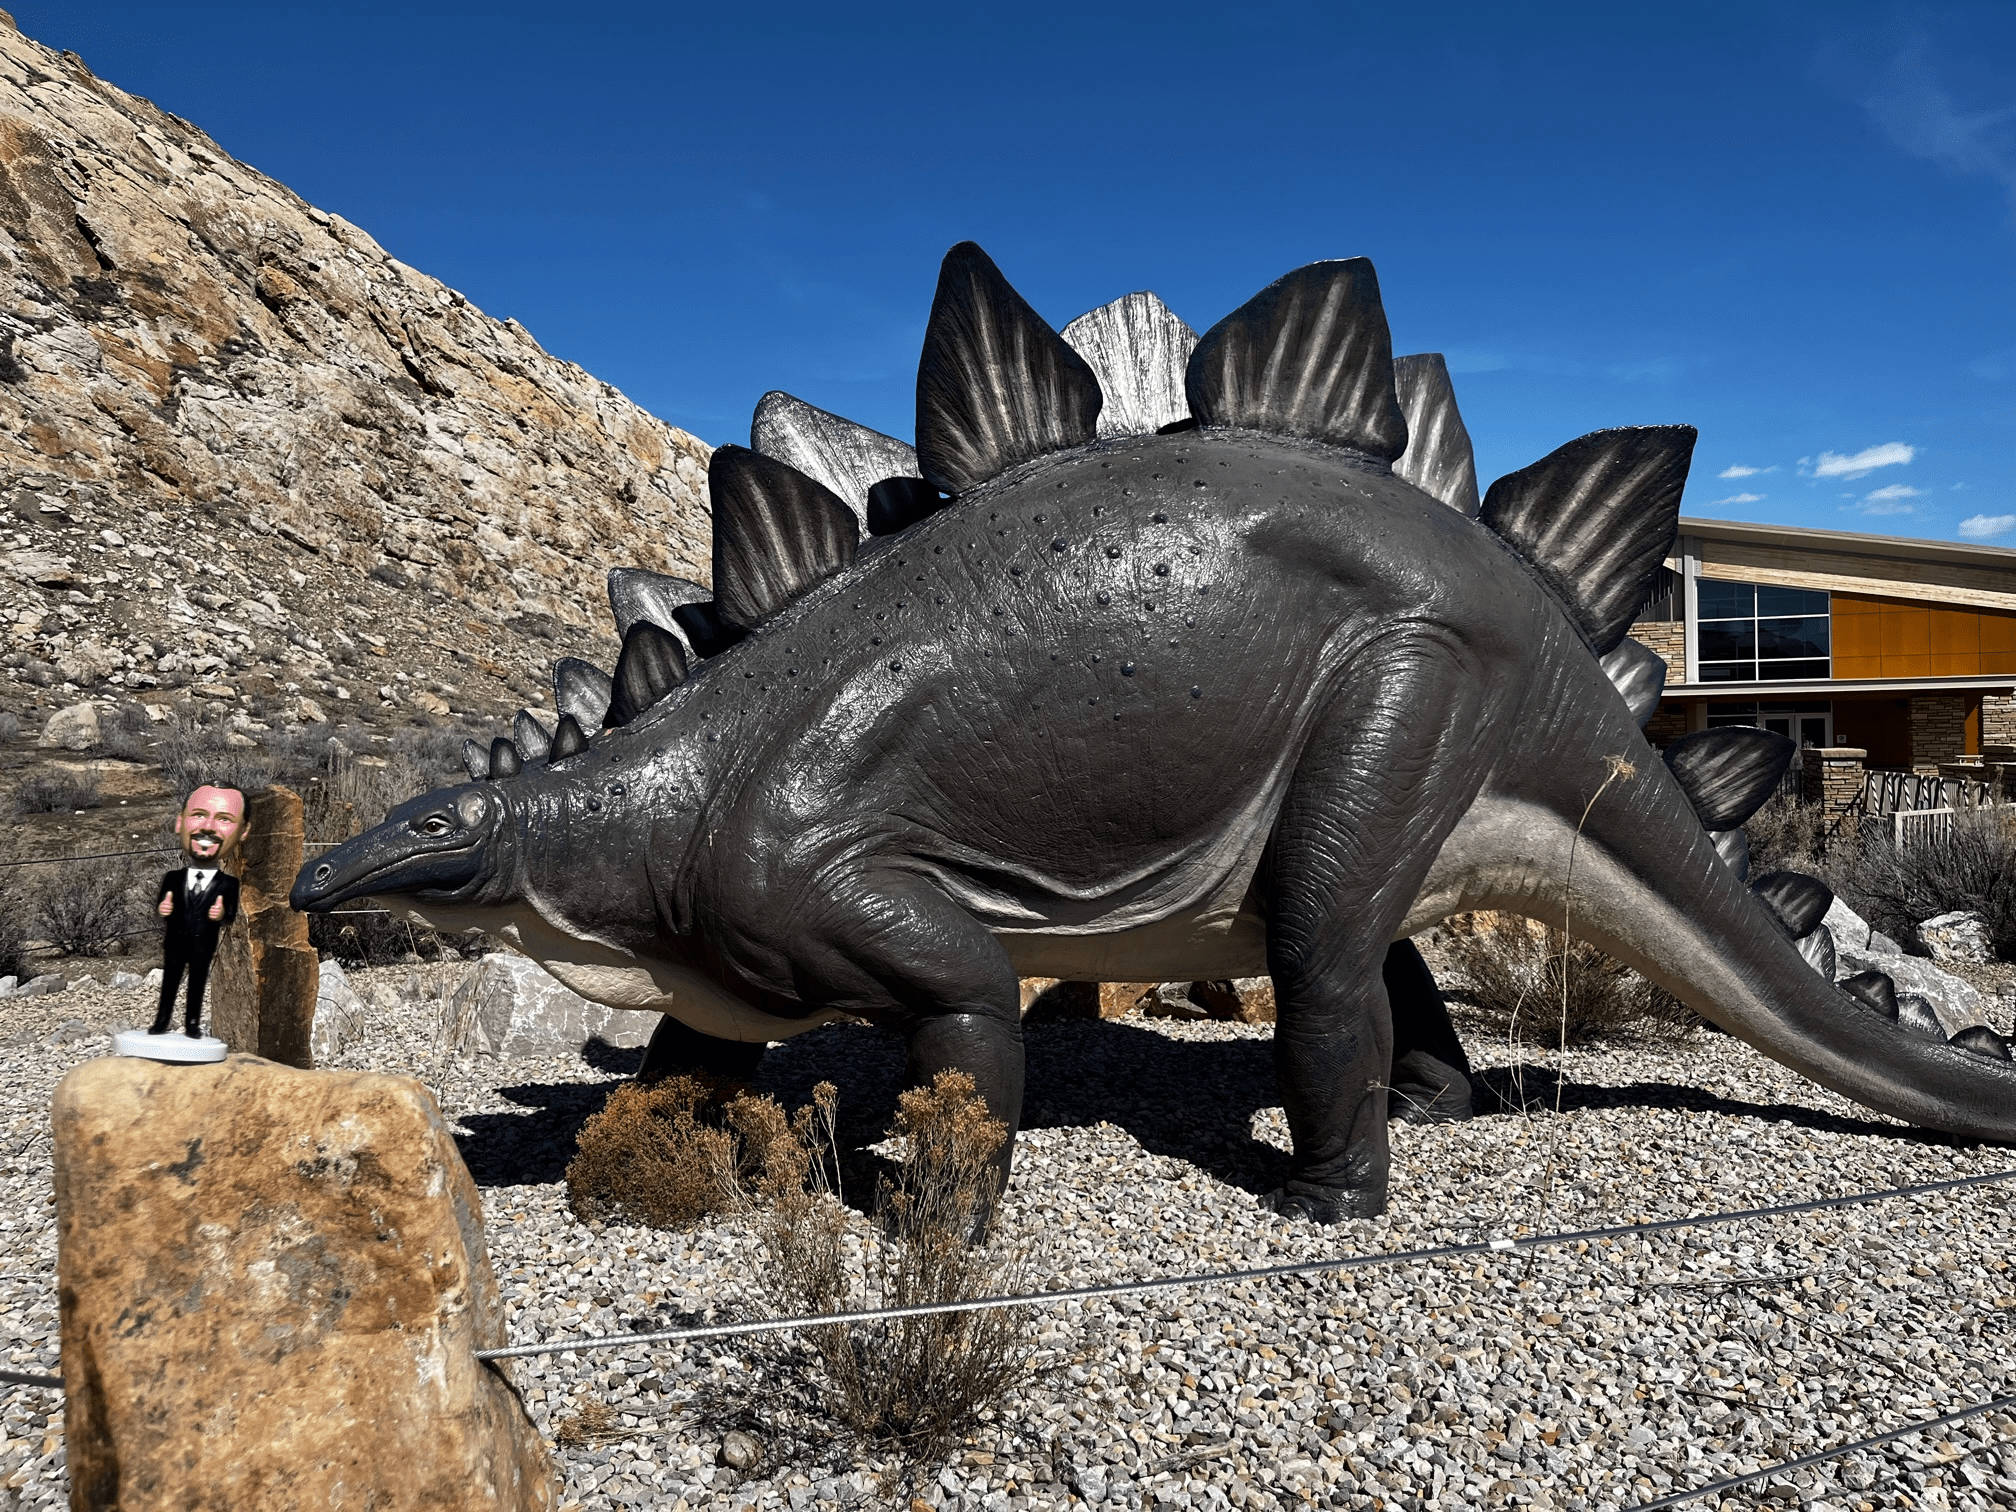 Little Danny visiting the Dinosaur National Monument in Utah